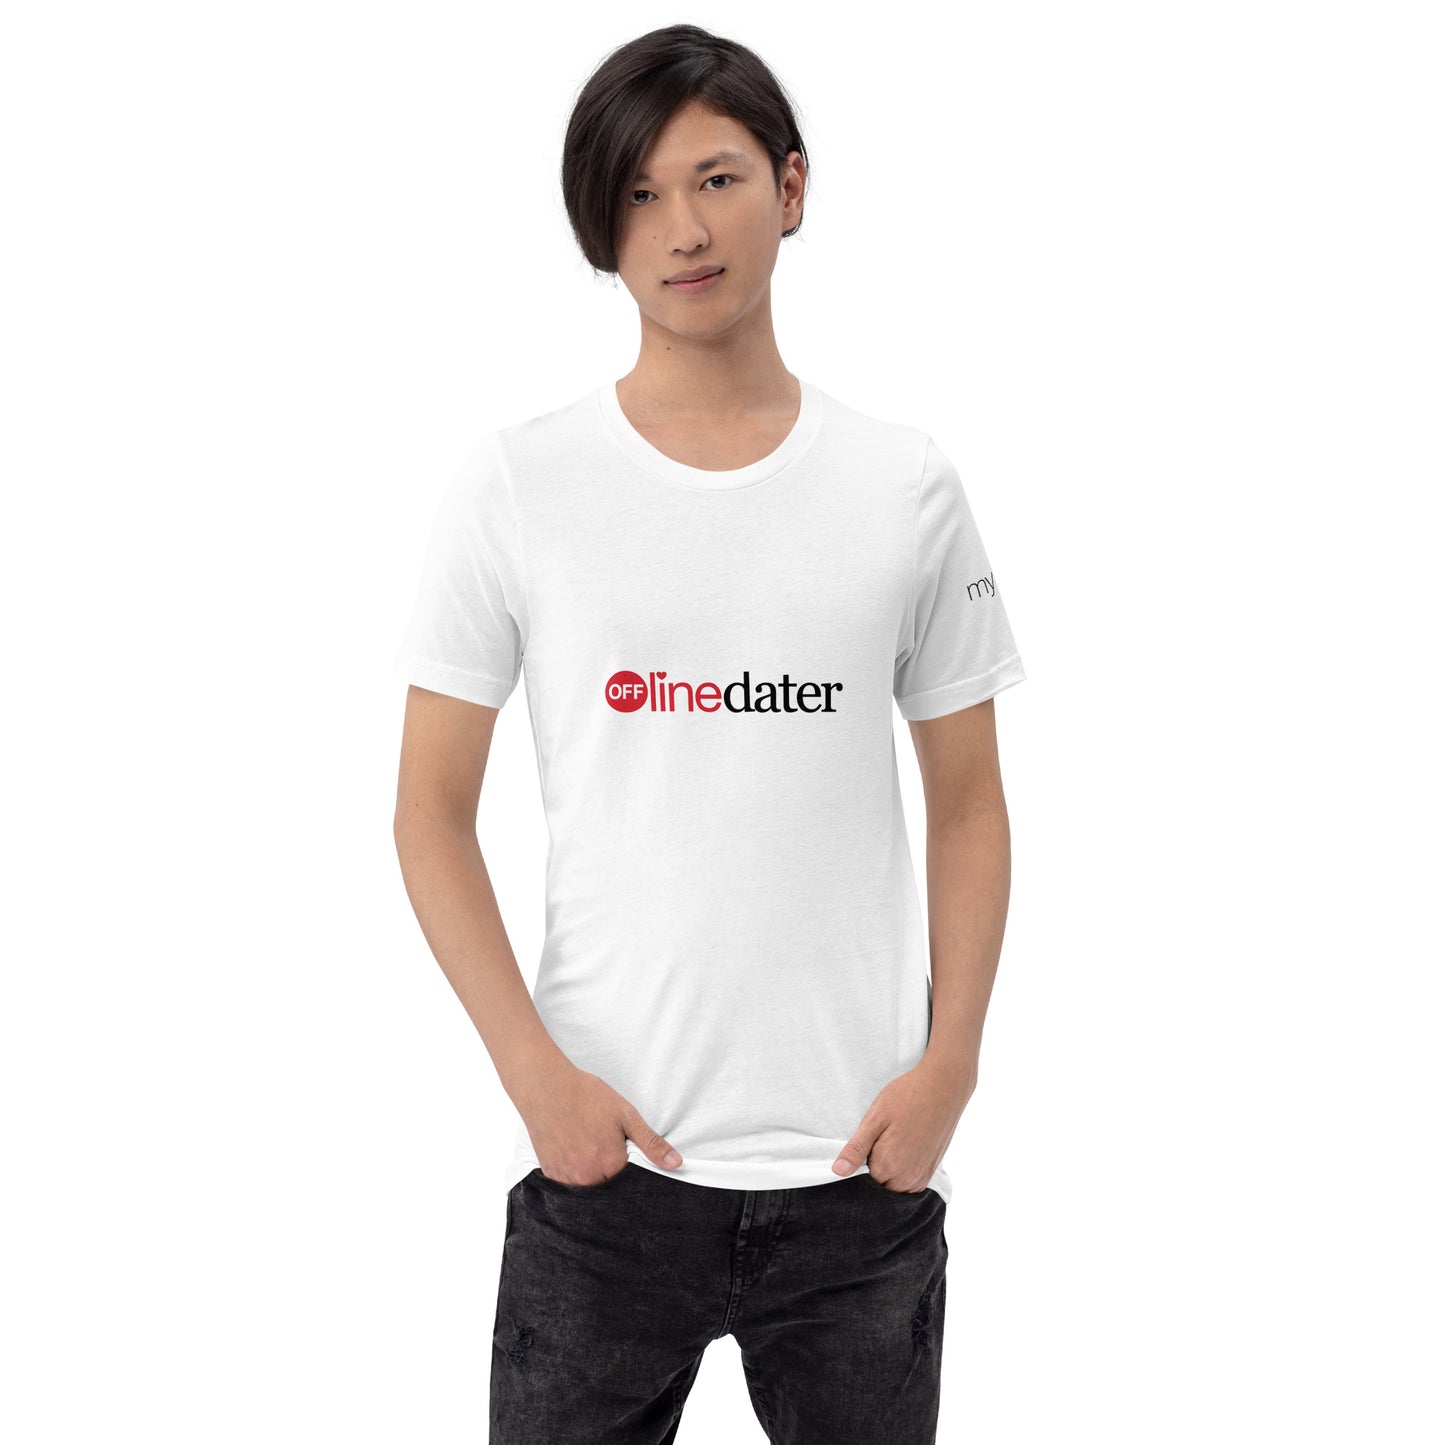 My Profile Offline Dater Unisex T-Shirt